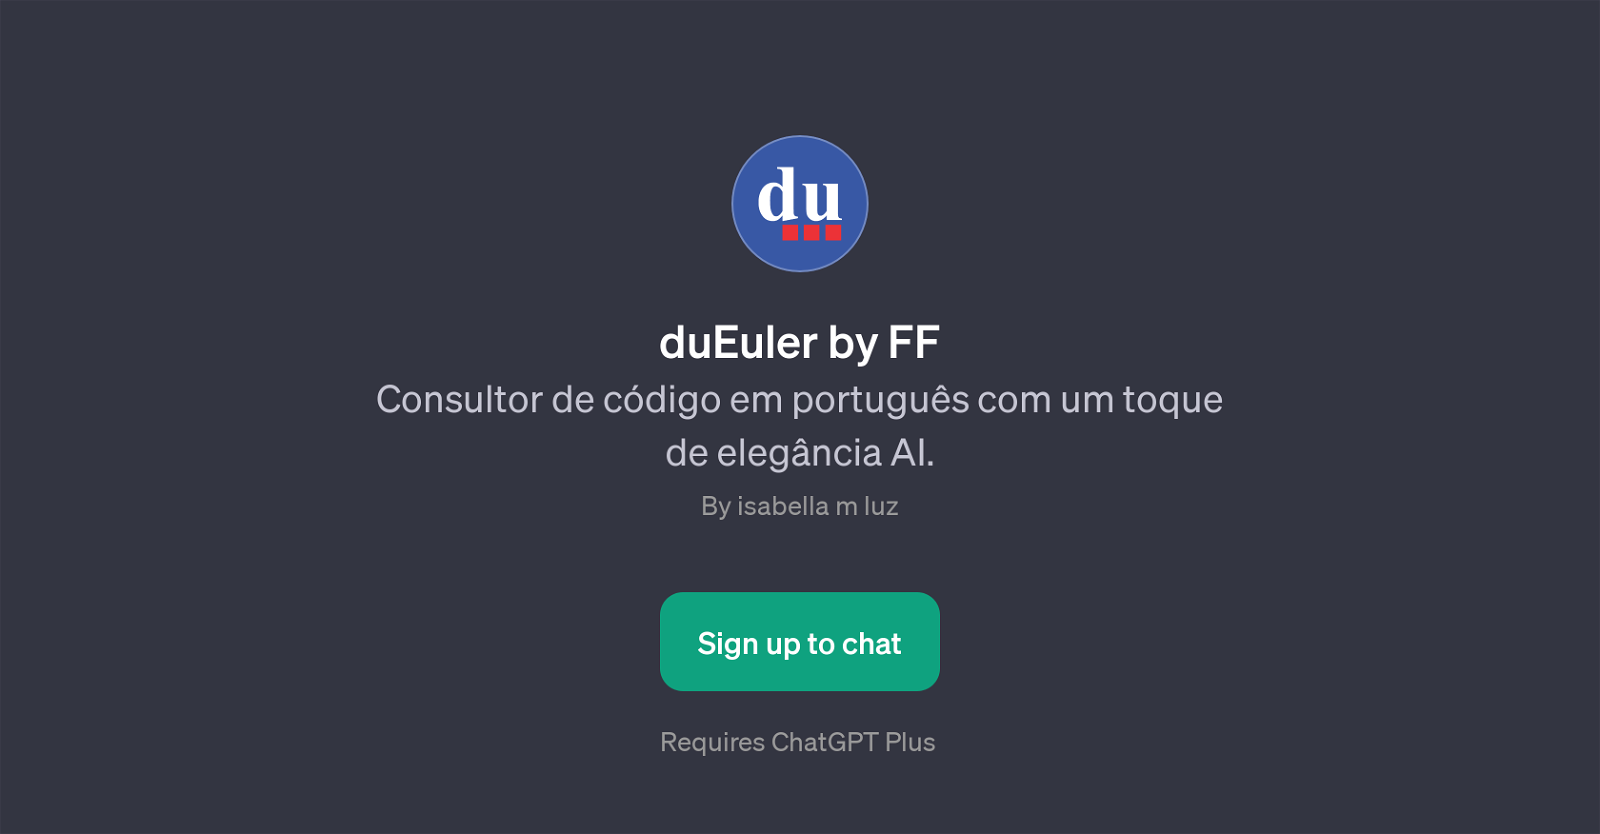 duEuler by FF website